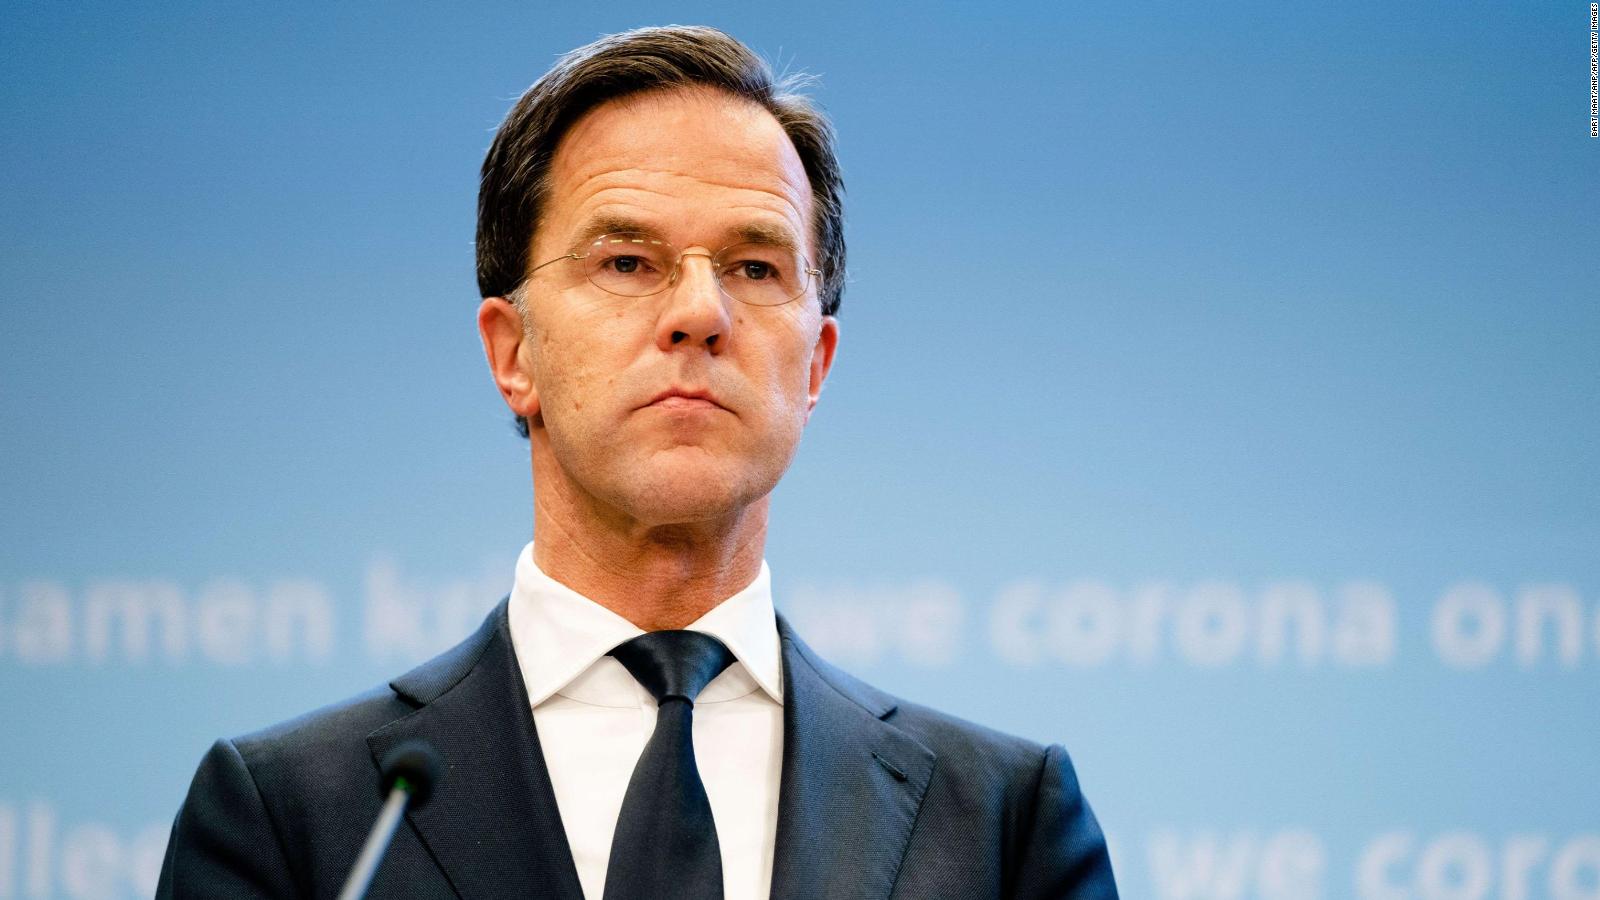 Dutch Prime Minister Mark Rutte won't ban 'Black Pete' blackface ...